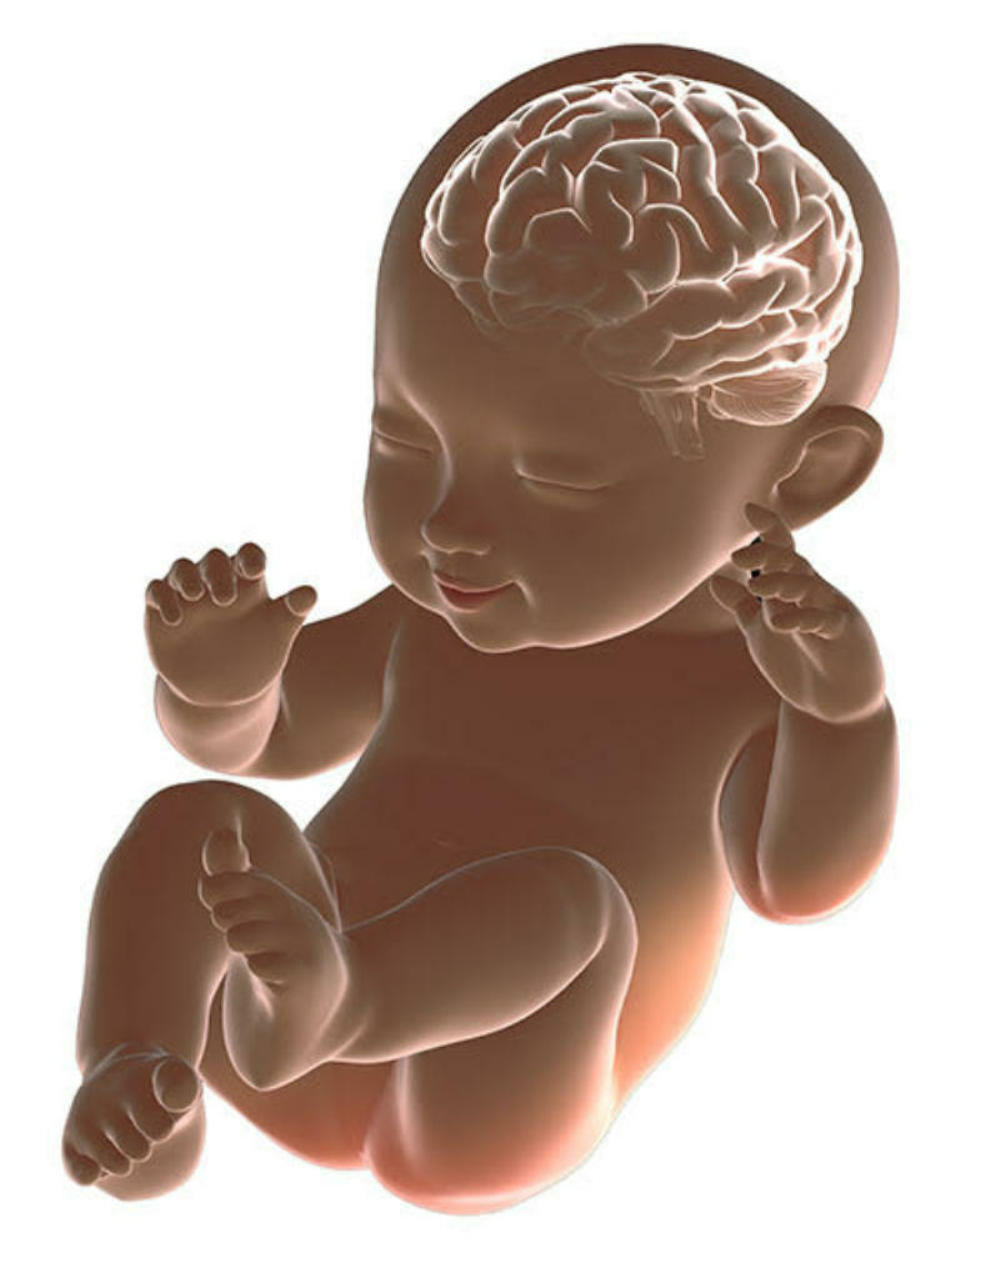 When Baby Develop Brain: Understanding the Process of Cognitive Development in Infants